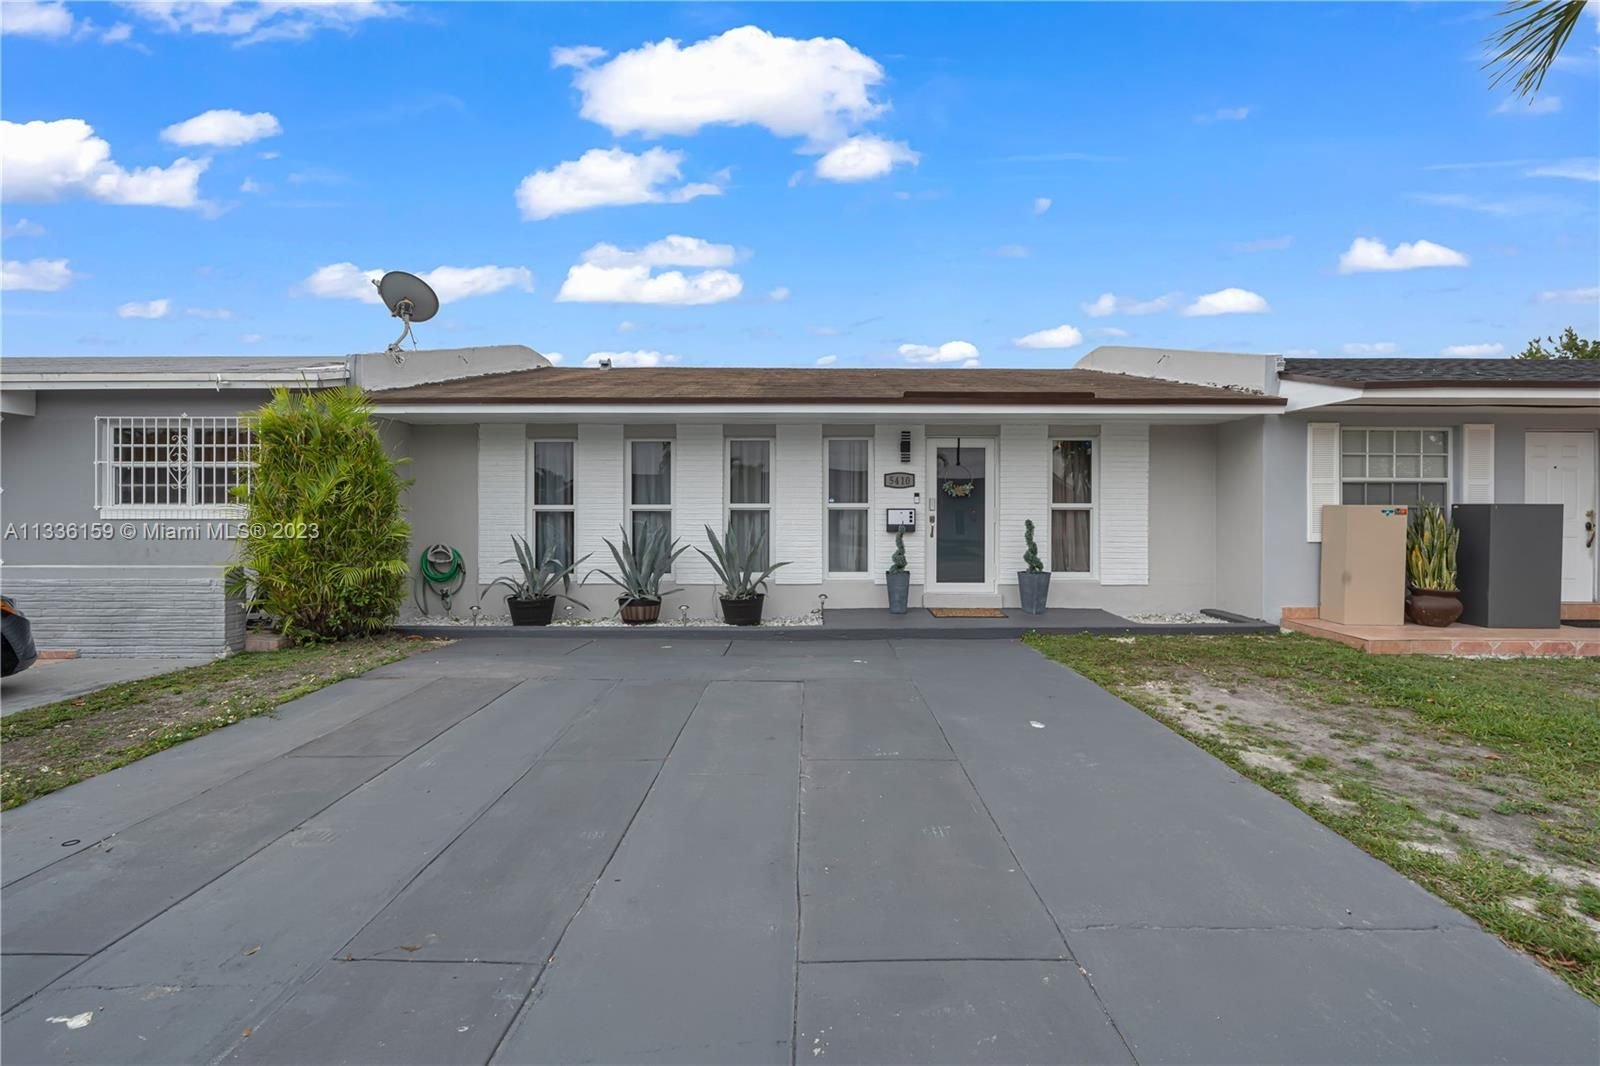 Real estate property located at 5410 128th Ave, Miami-Dade County, Miami, FL